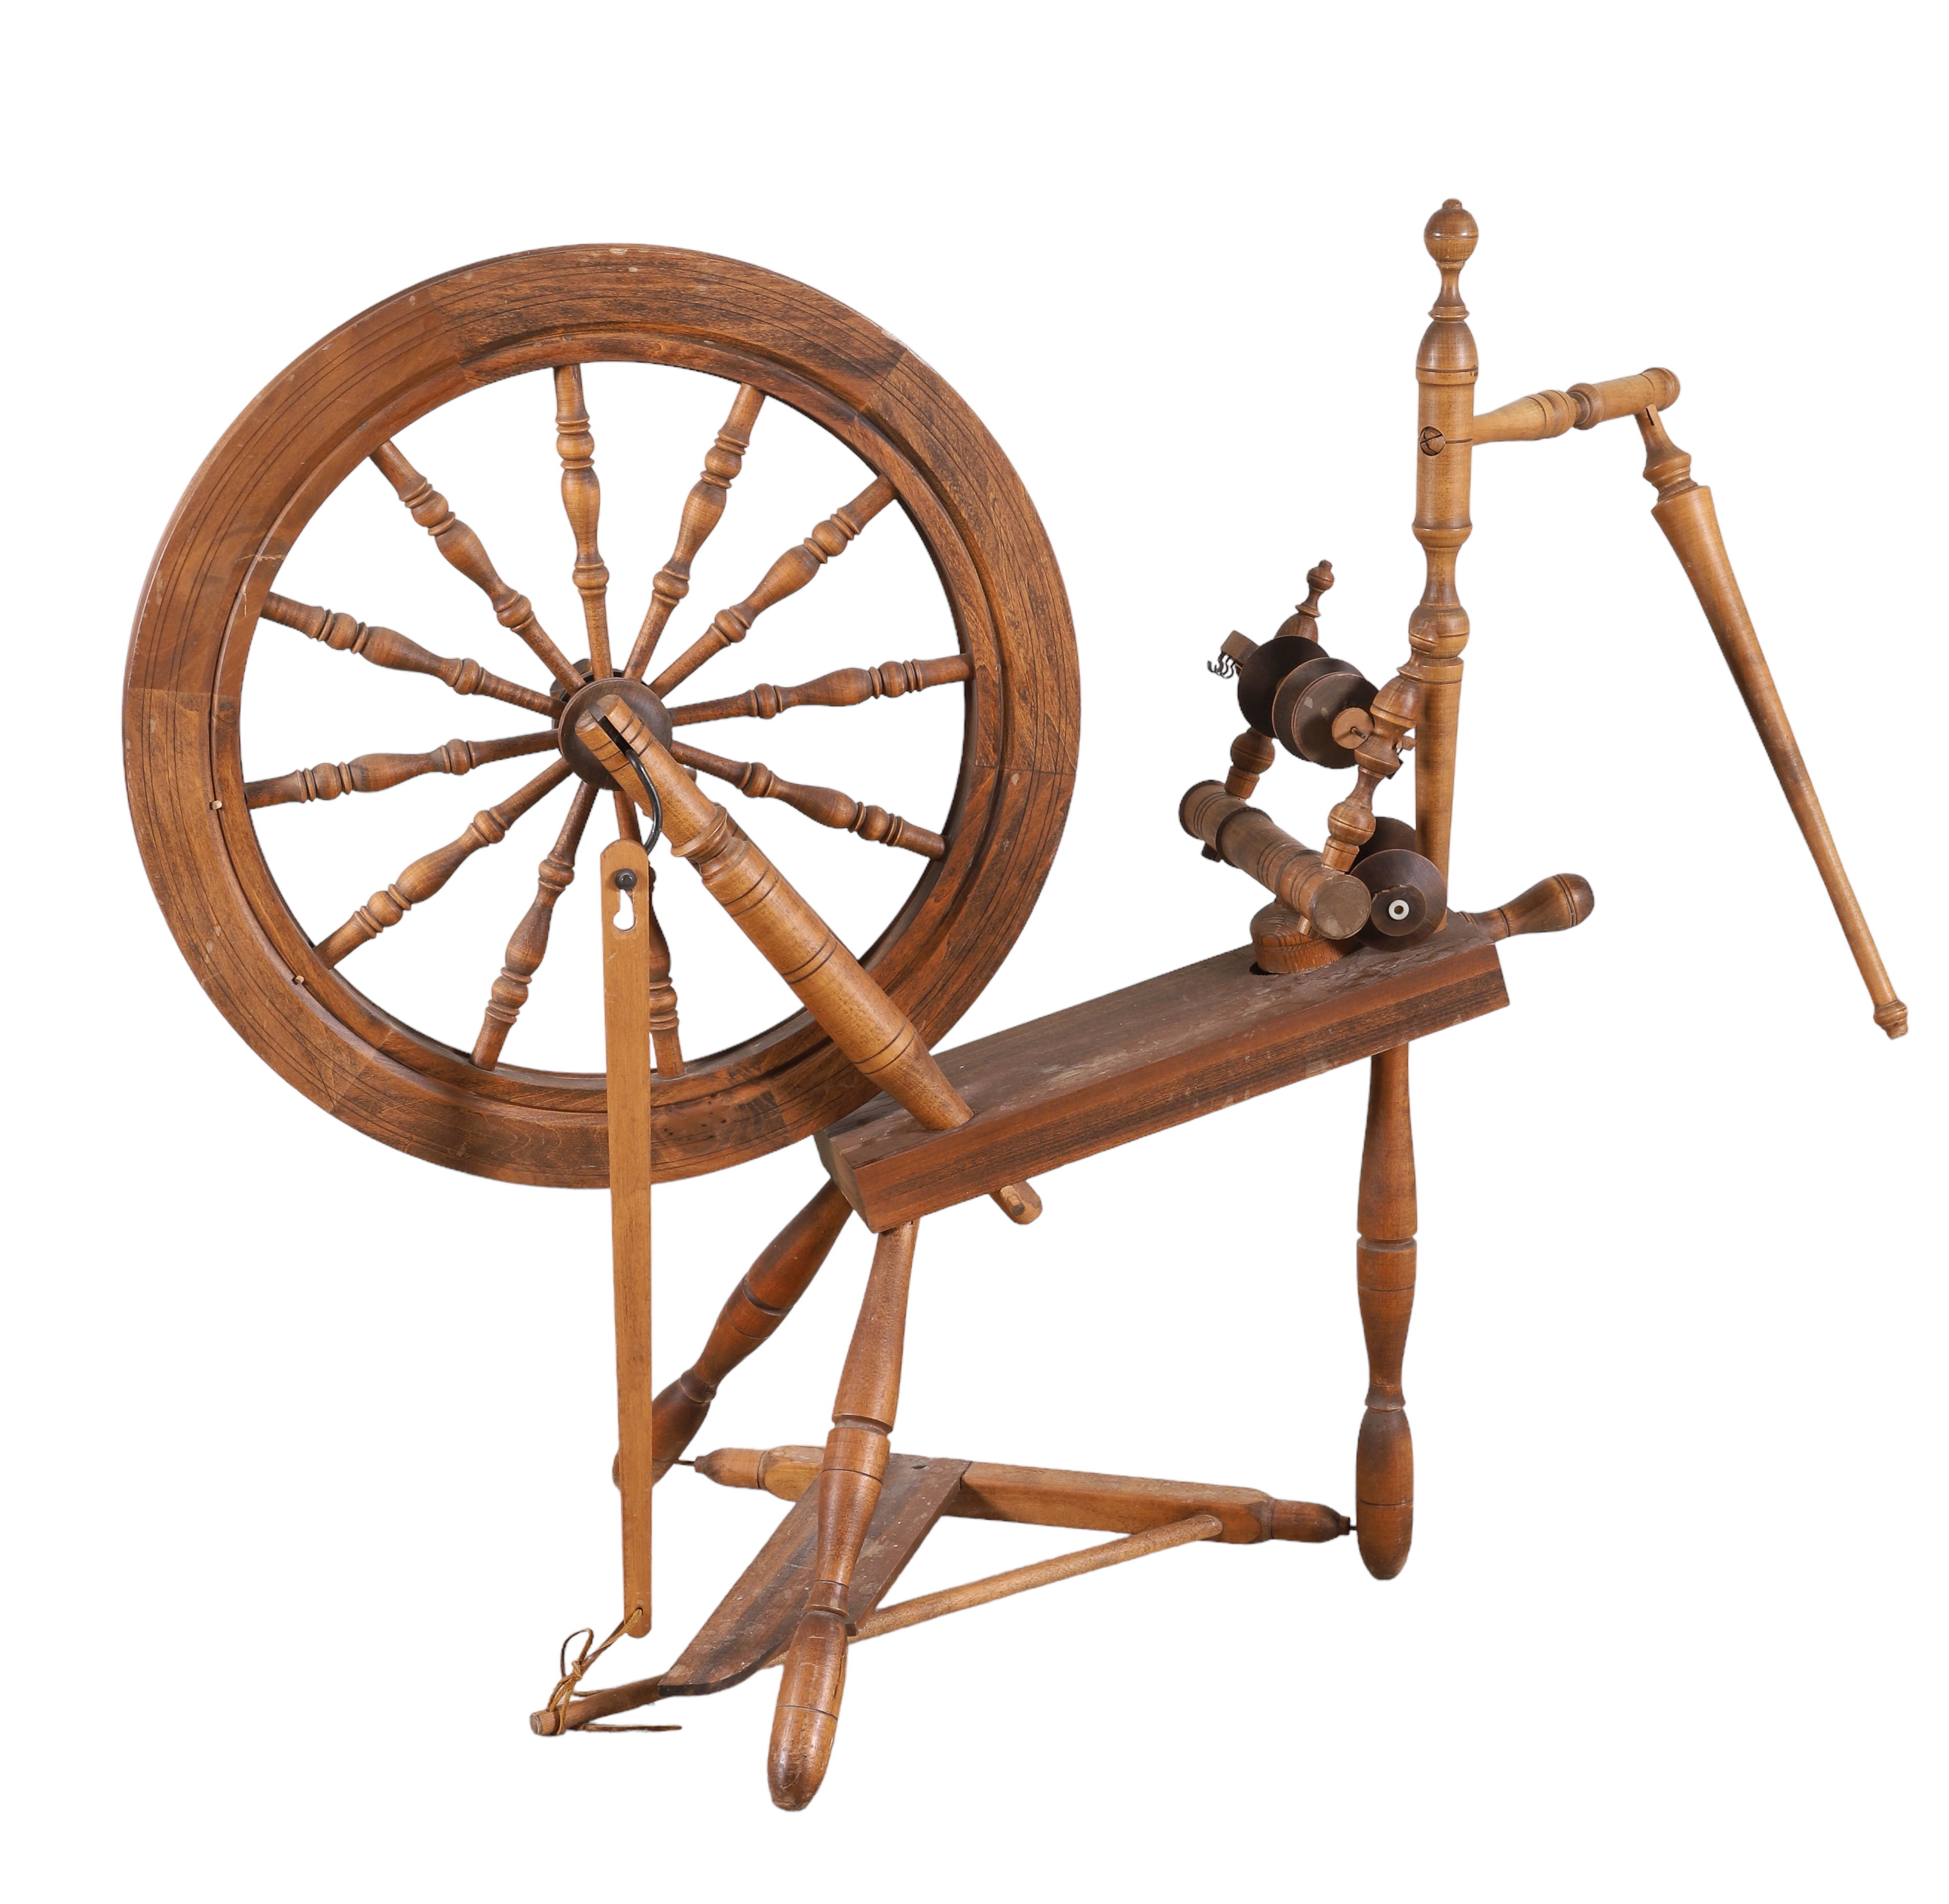 Pine spinning wheel, 37"h x 39"w